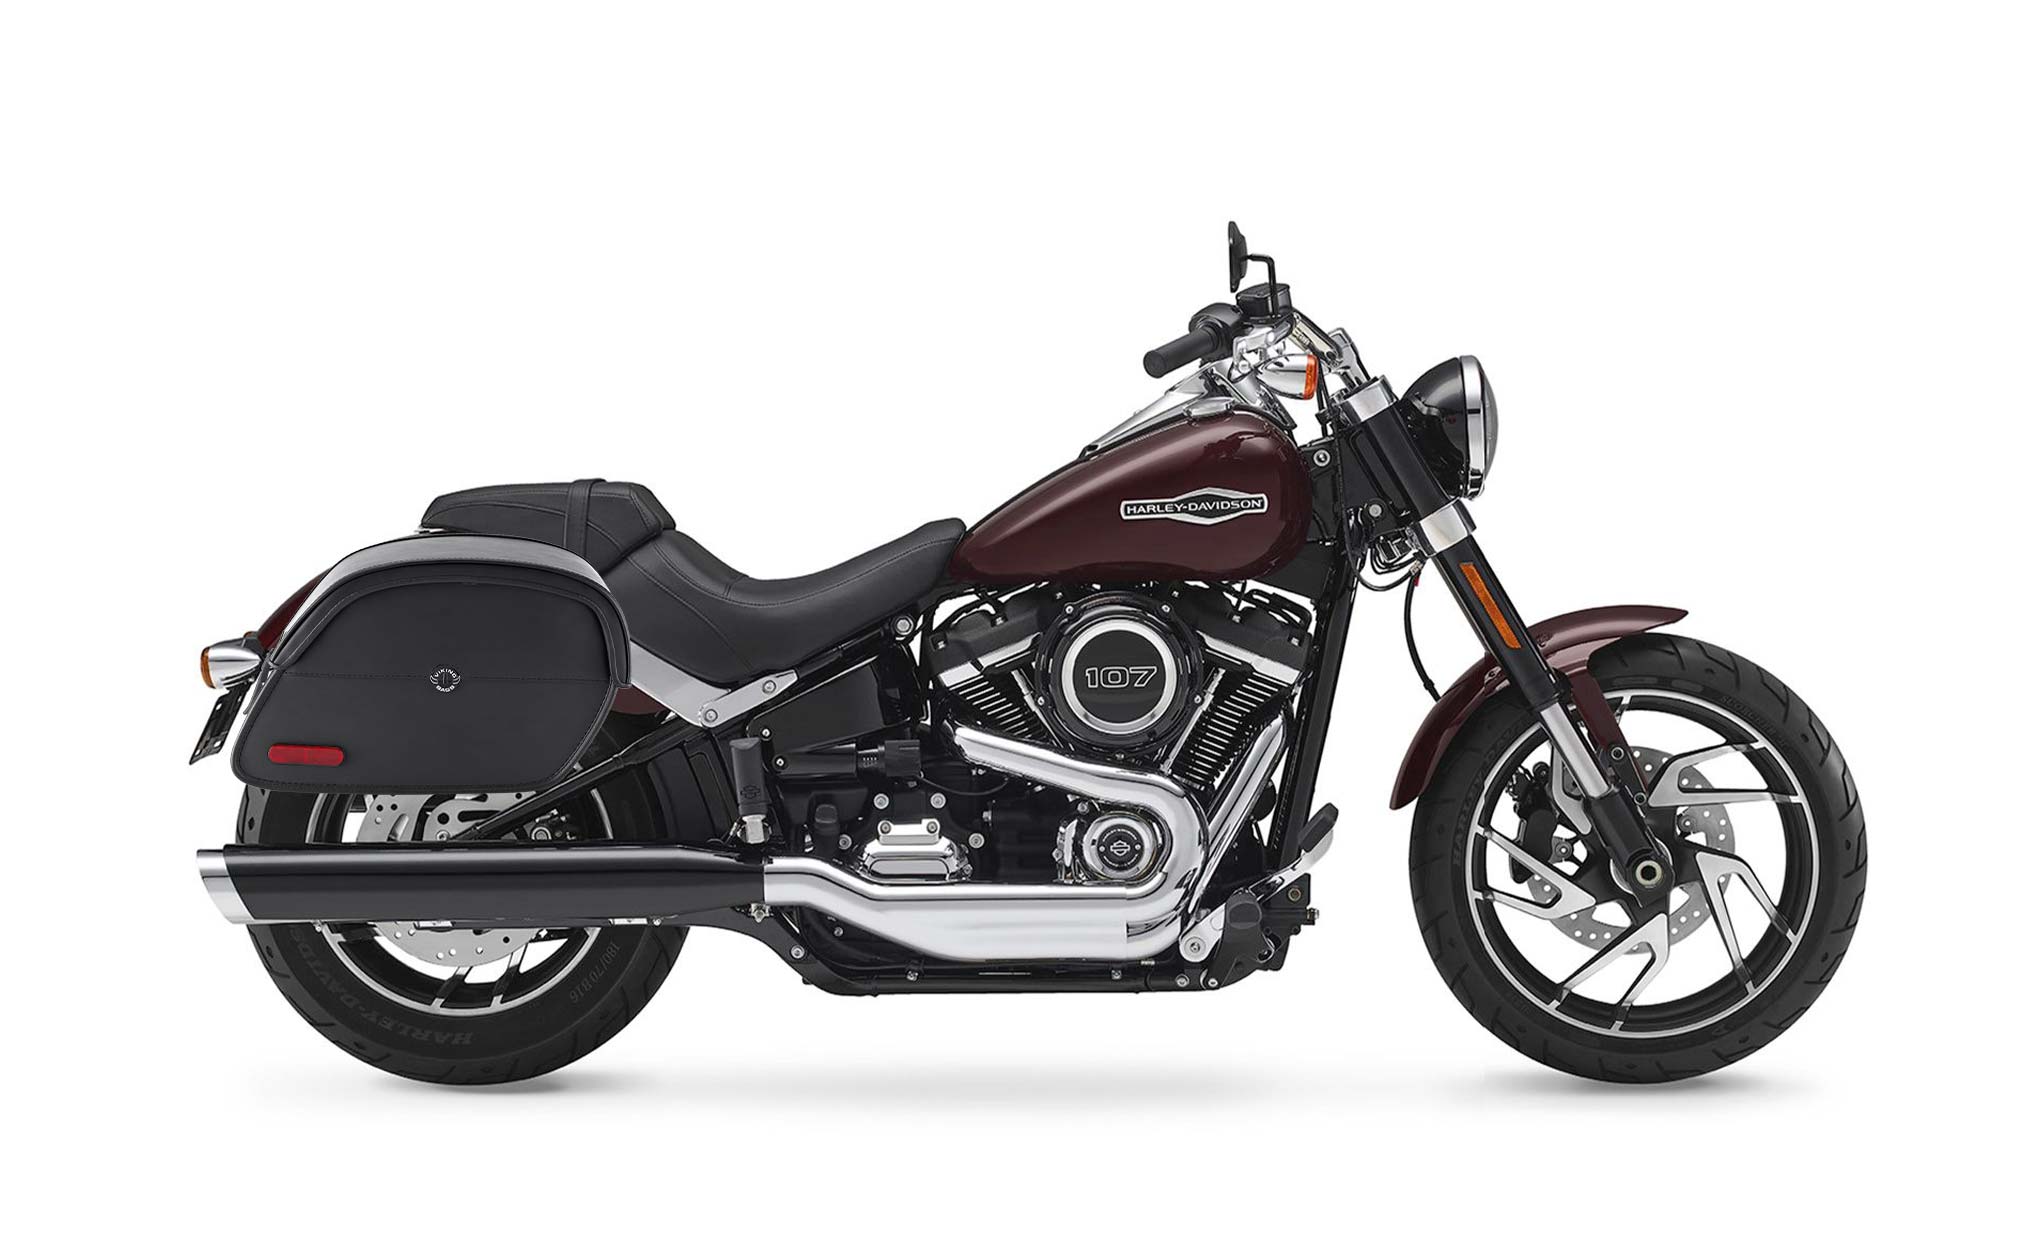 Viking California Large Leather Motorcycle Saddlebags For Harley Davidson Softail Sport Glide Flsb on Bike Photo @expand